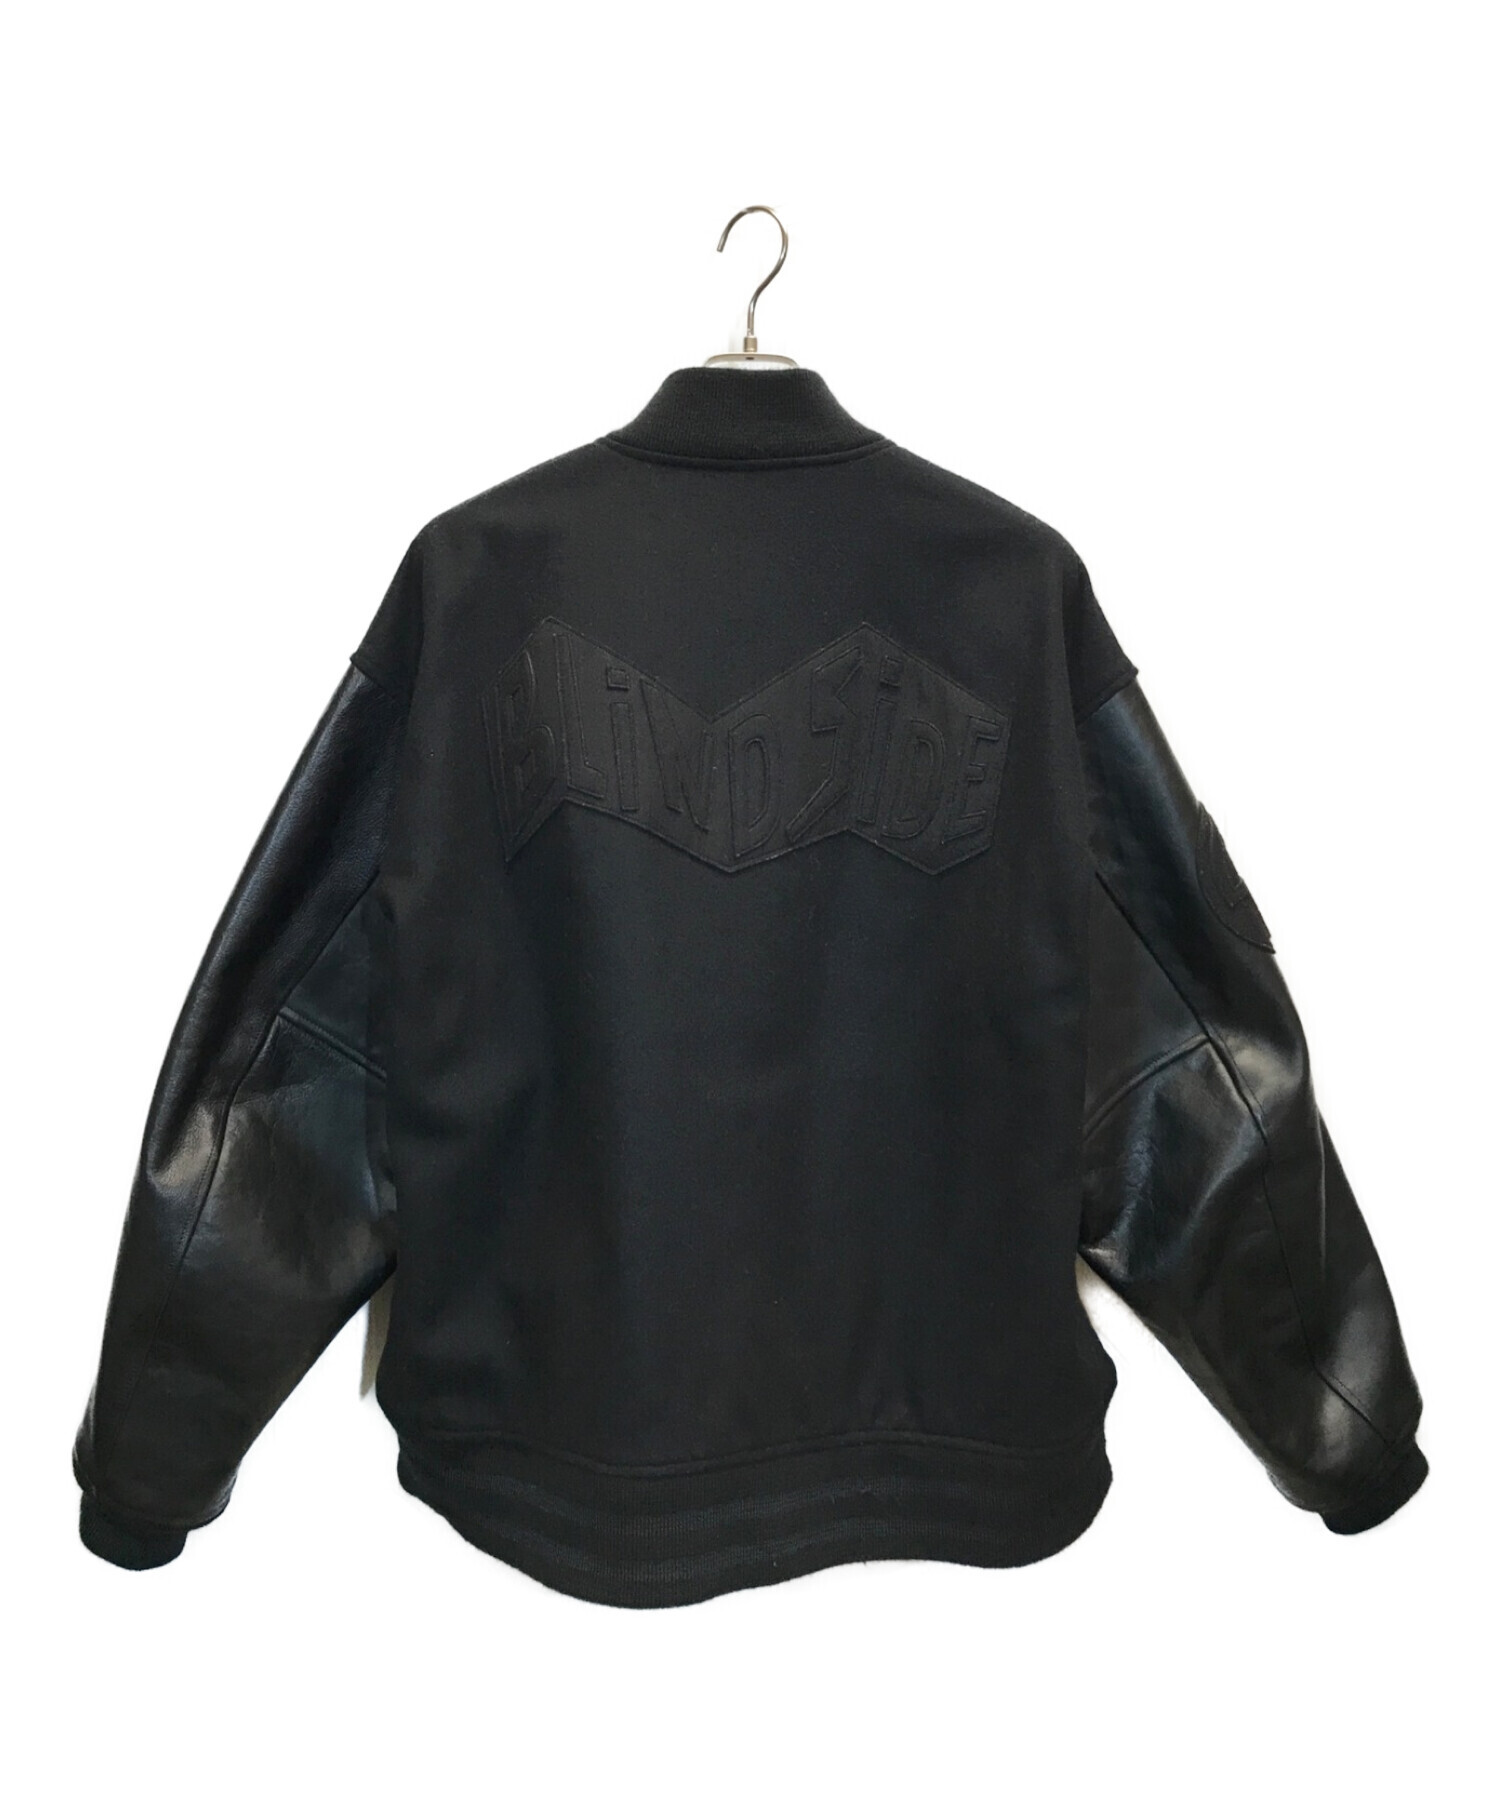 evisen×deluxe (エビセン×デラックス) Varsity JKT　バーシティジャケット スタジャン 袖レザースタジャン ブラック  サイズ:40